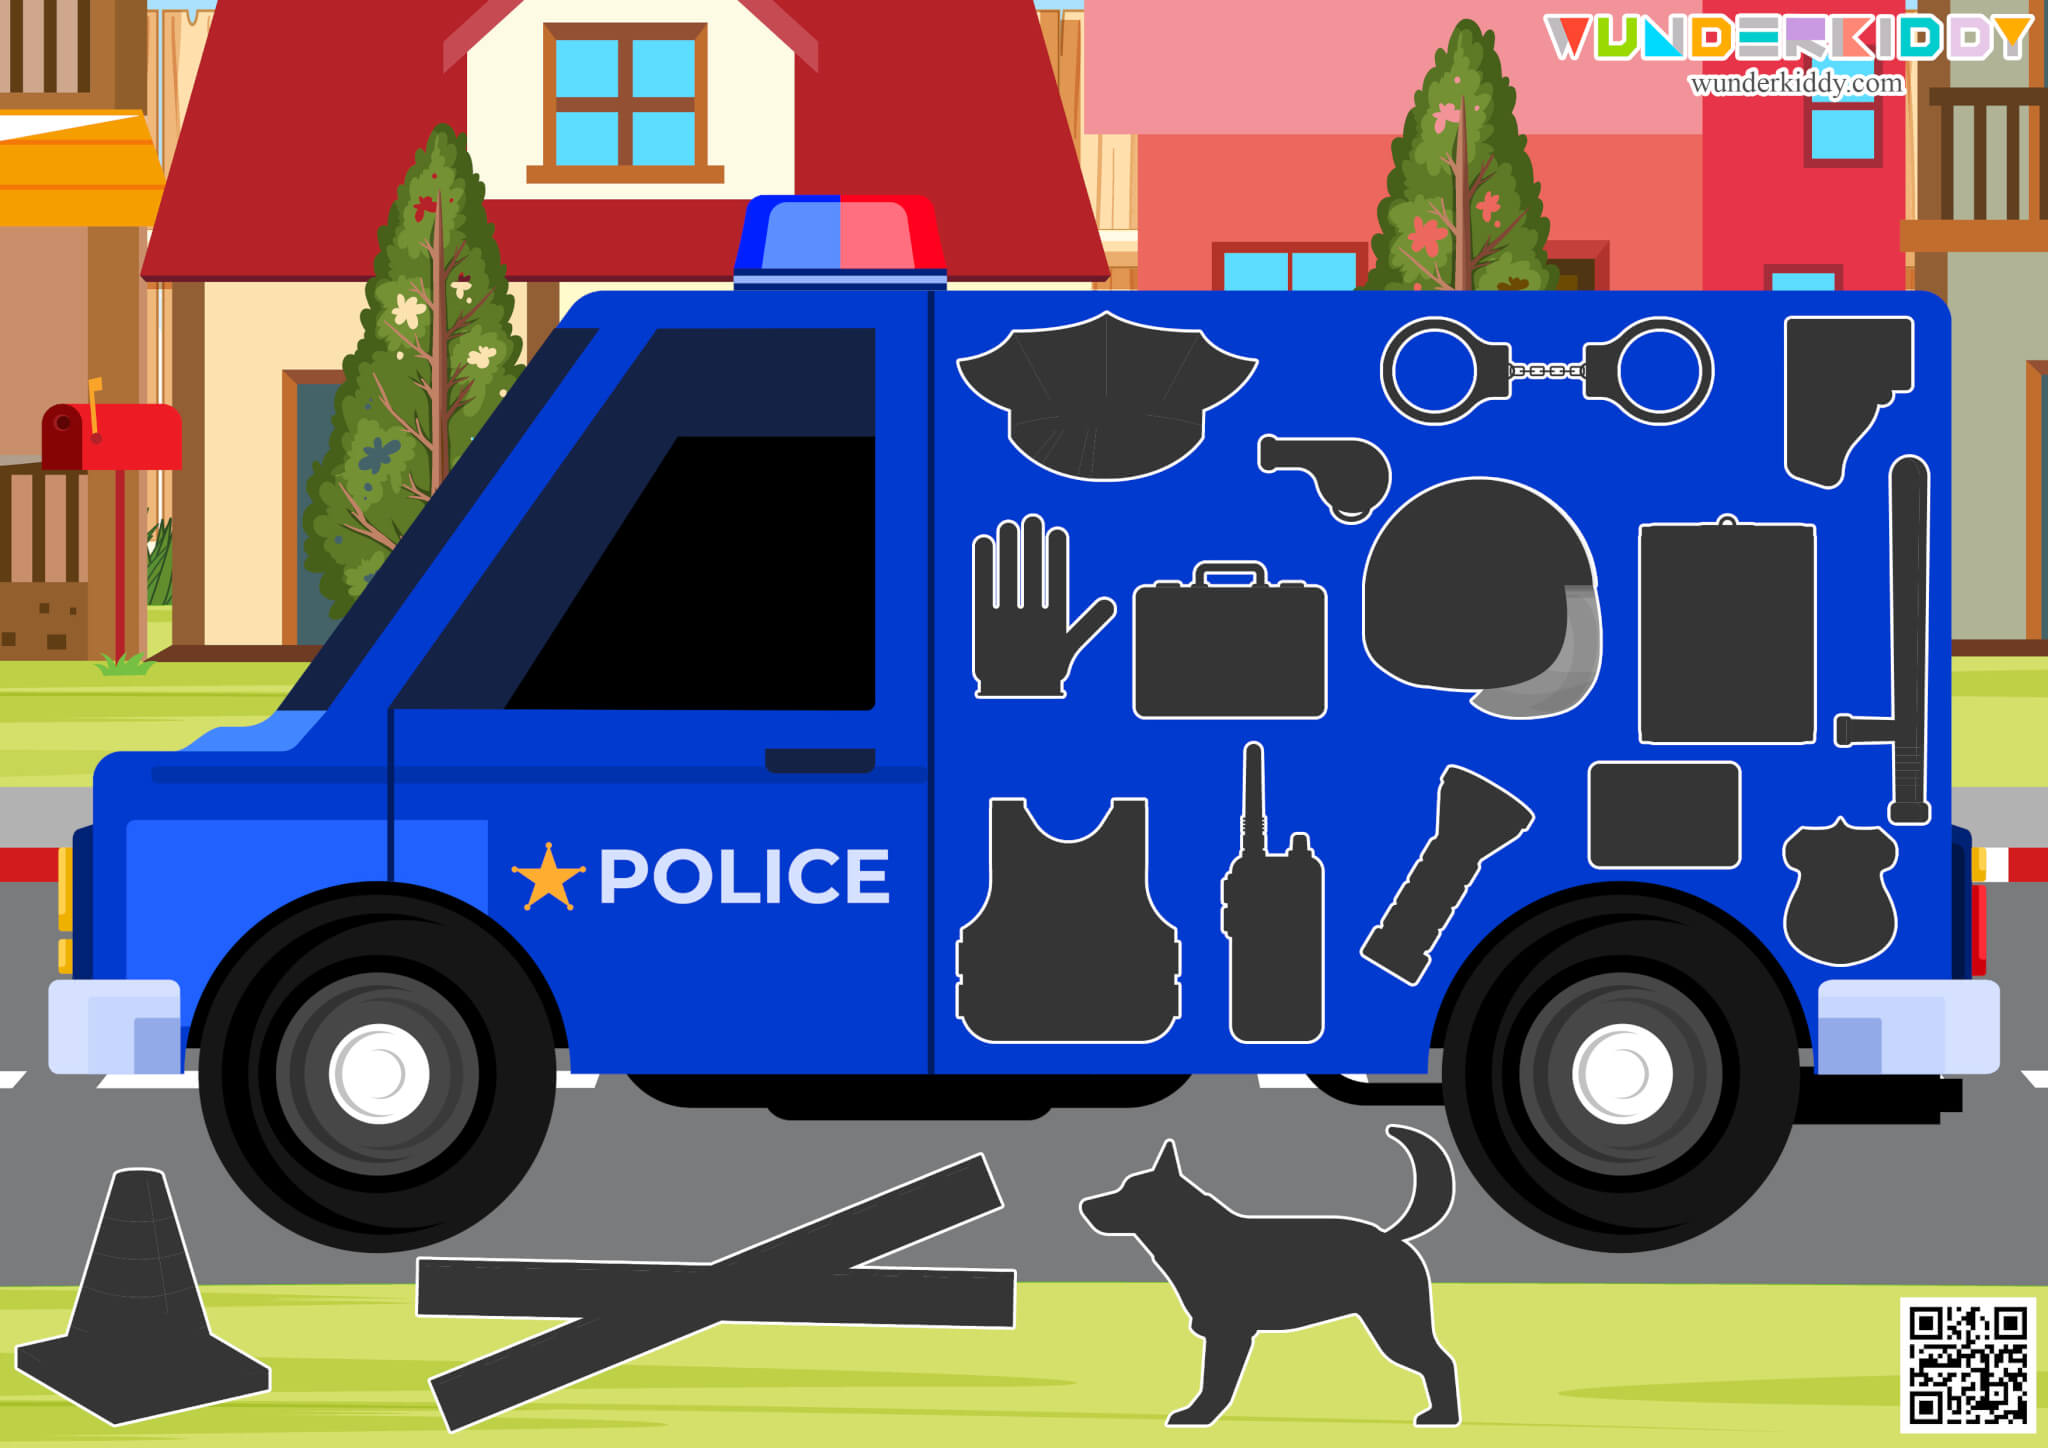 Police Equipment Worksheet - Image 2